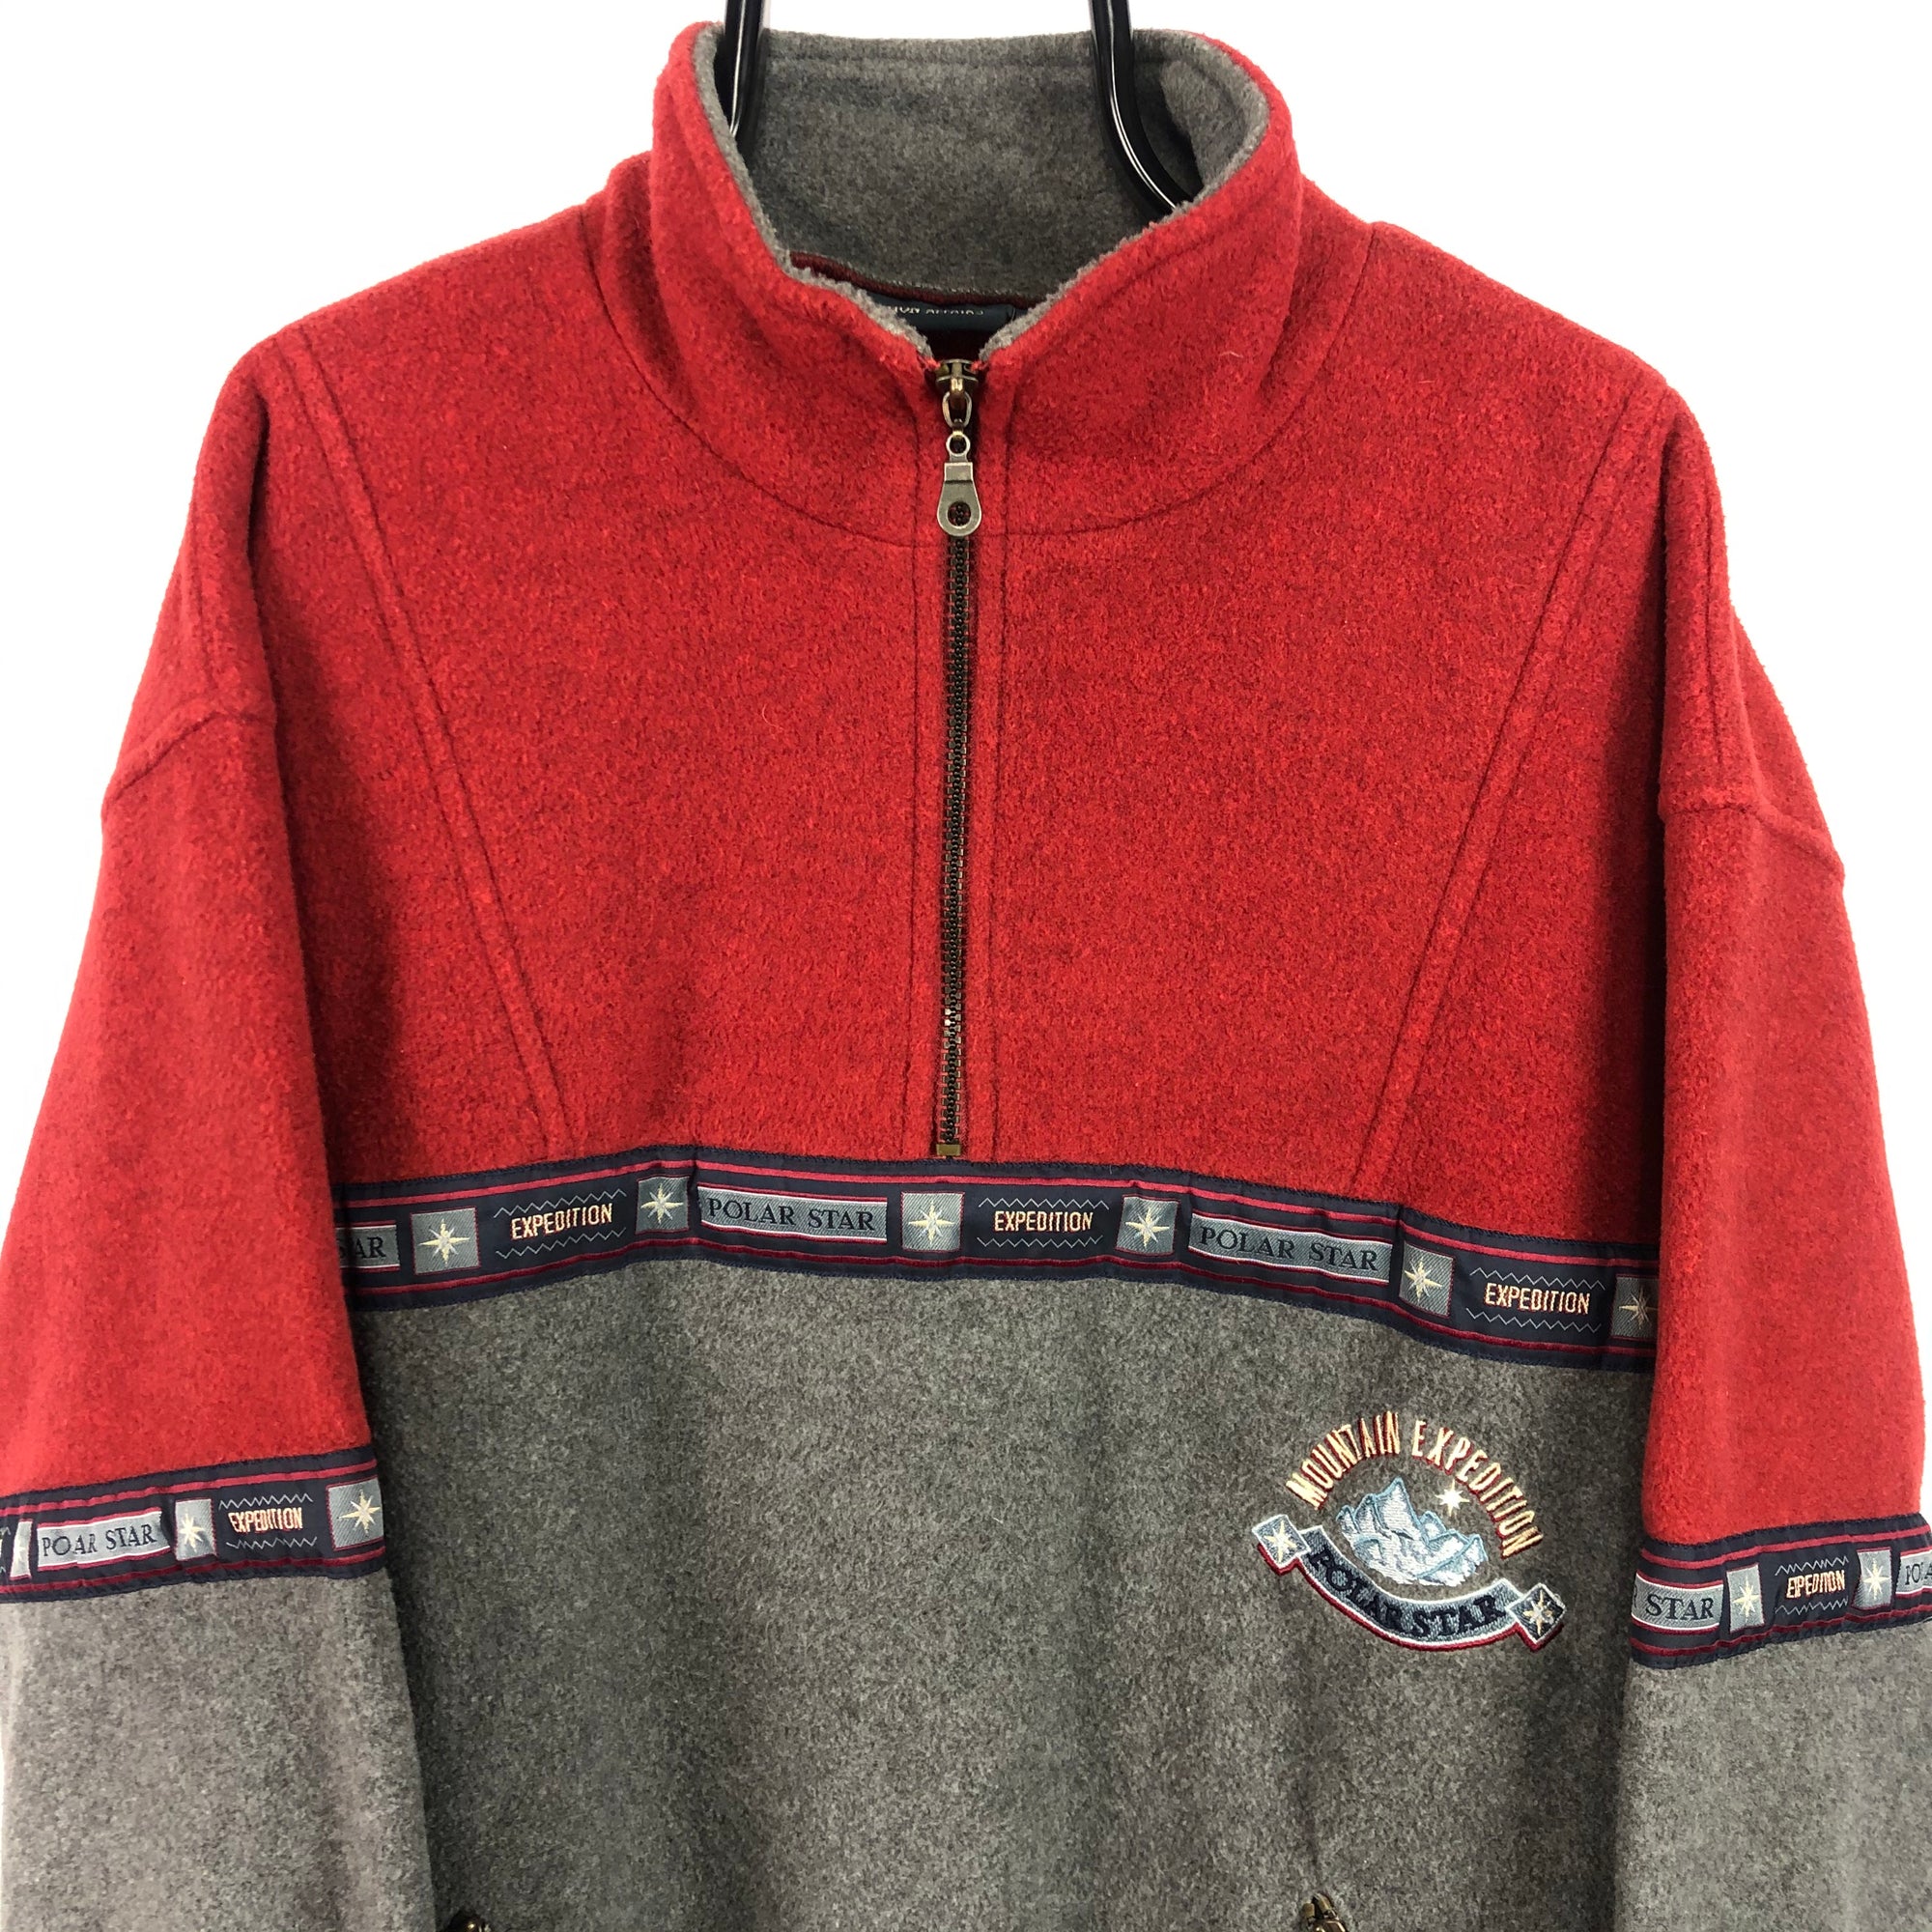 Vintage 'Mountain Expedition' Fleece in Red/Grey - Men's XL/Women's XXL